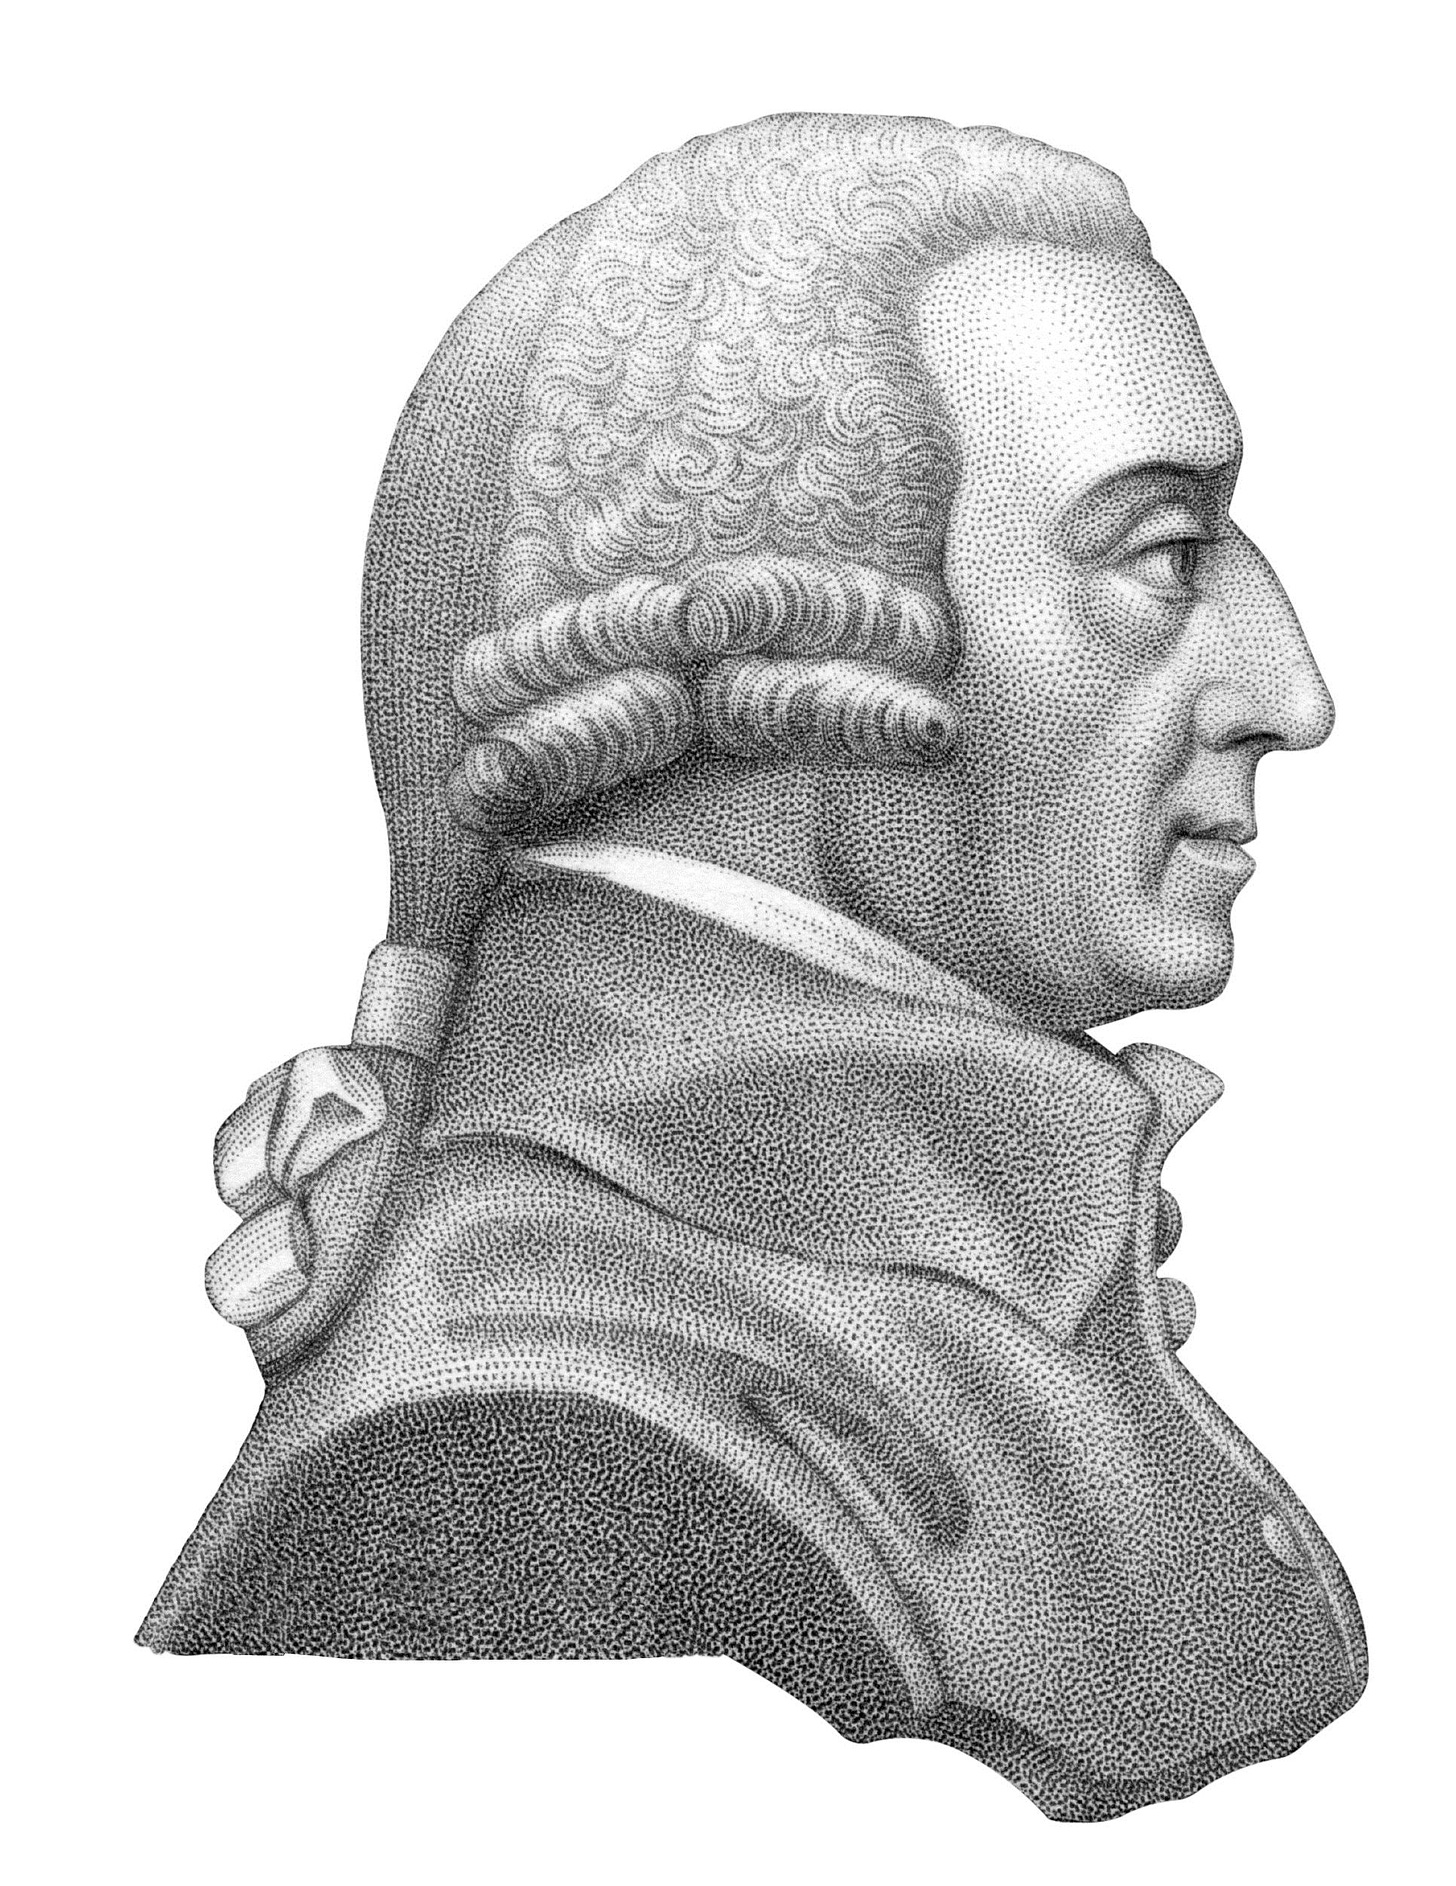 File:Adam Smith D8.jpg - Wikimedia Commons